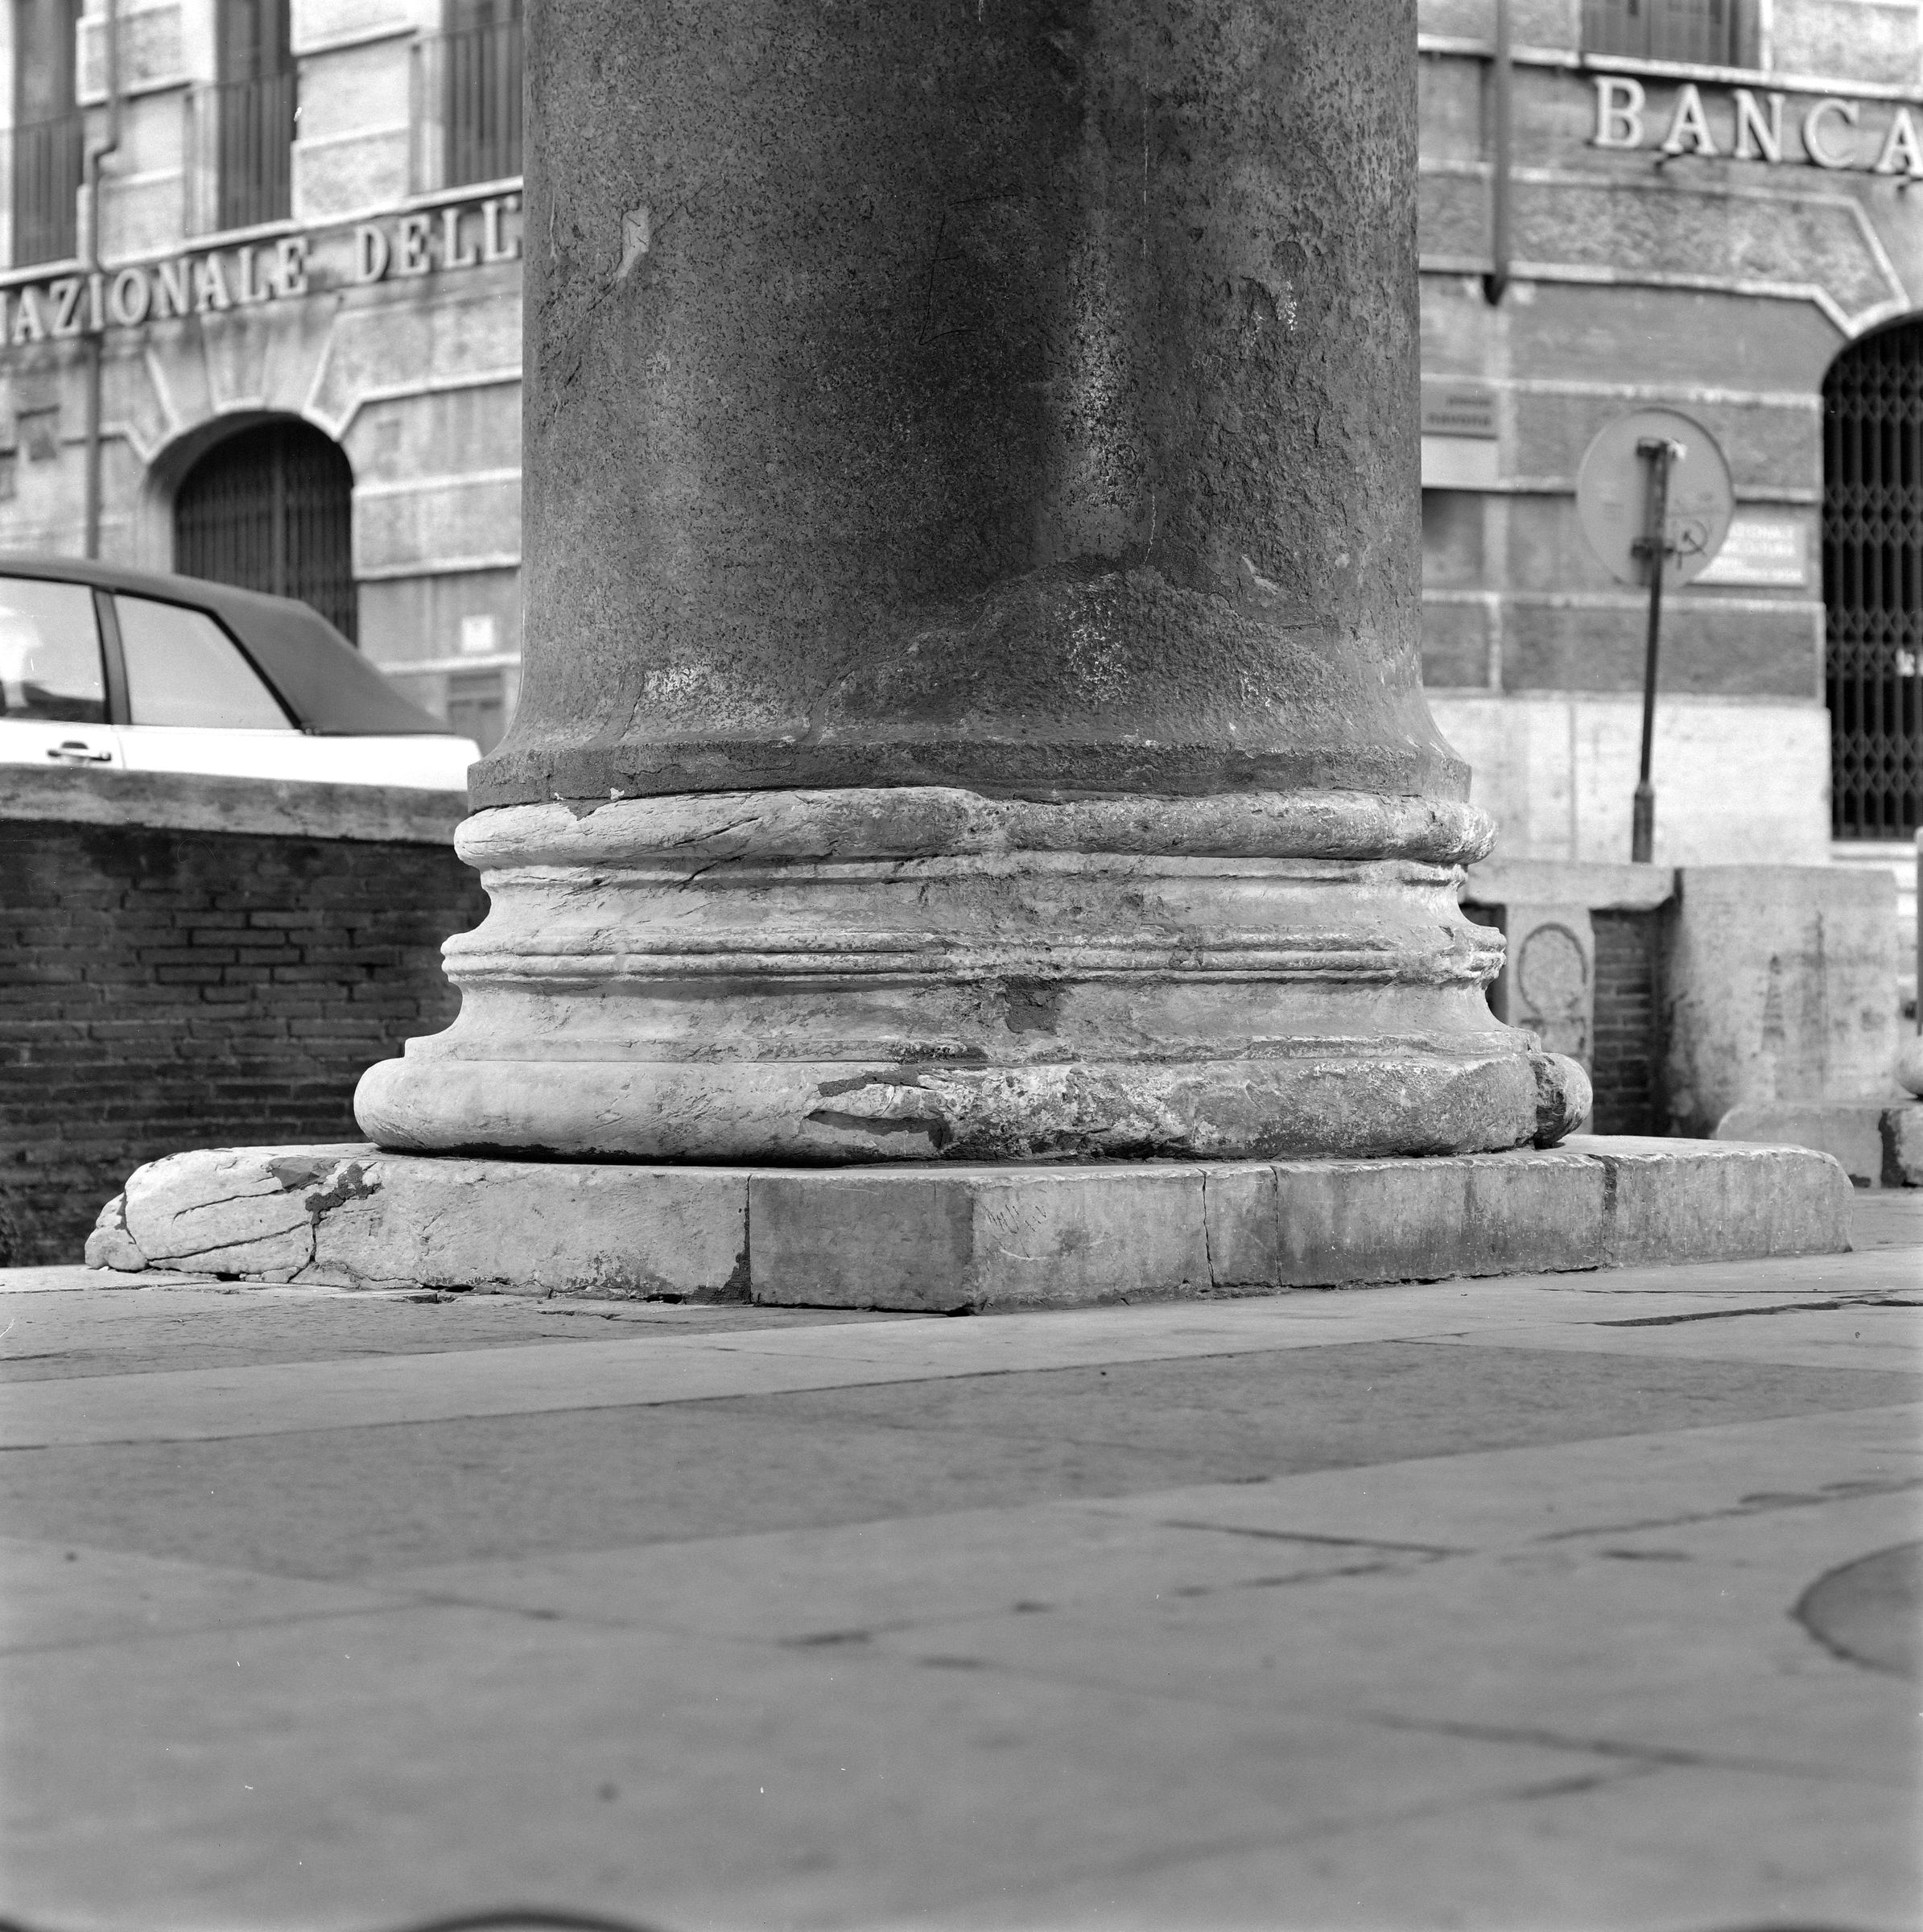 Fotografo non identificato, Pantheon,1951-2000, gelatina ai sali d'argento, 6x6 cm, N077970